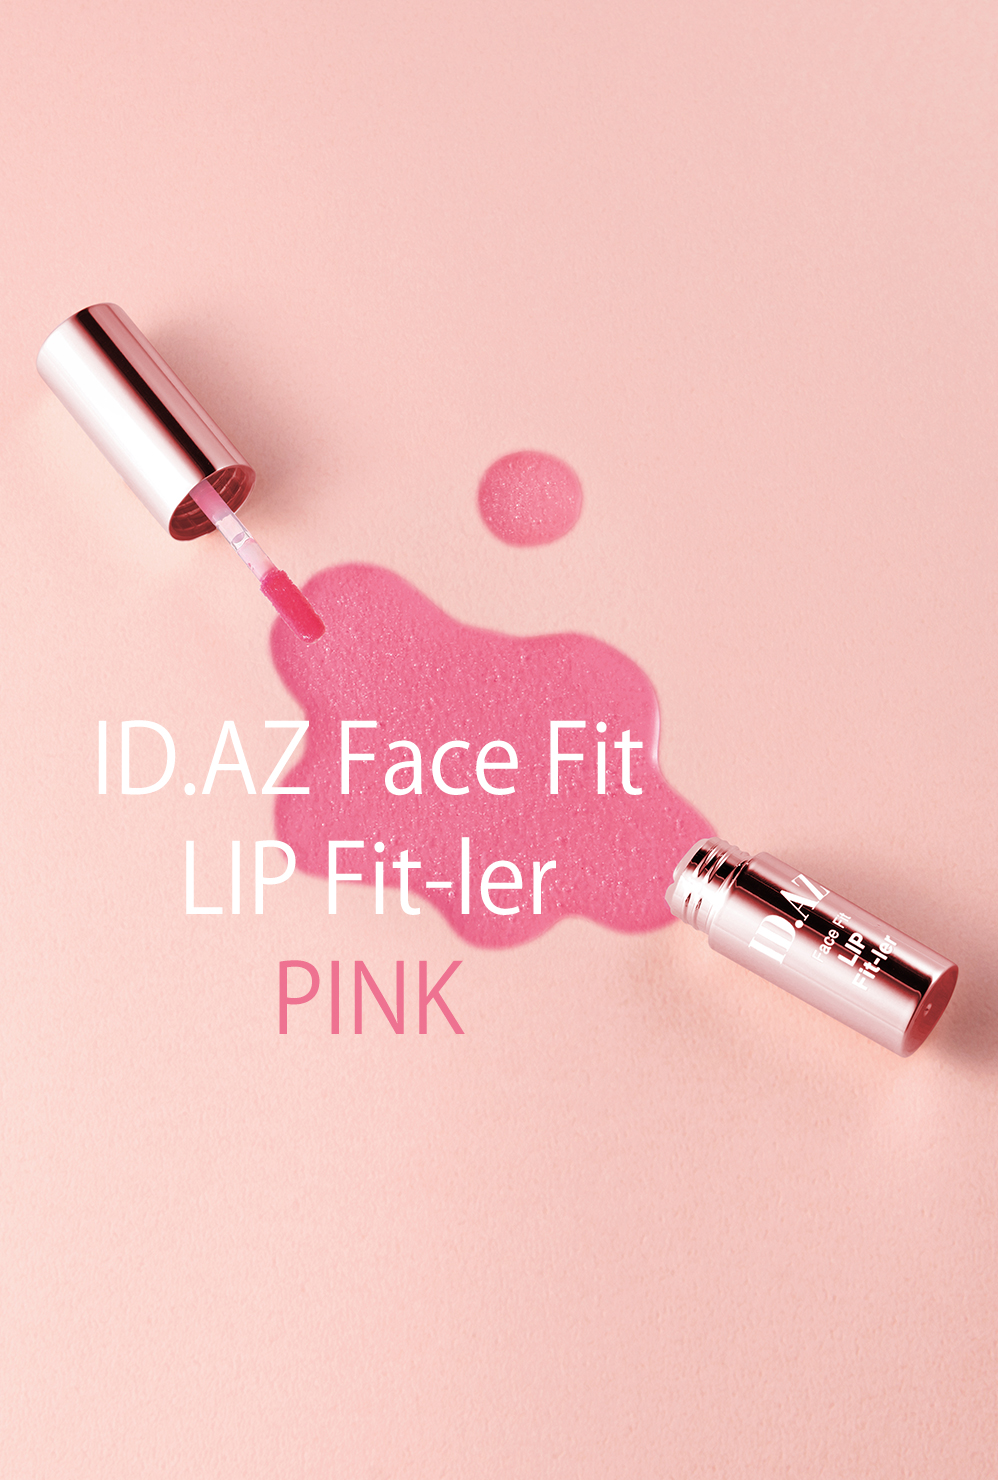 Face Fit LIP Fit-ler Pink フェイスフィット リップ FIT-LER ピンク リップ グロス 唇 ツヤ ハリ キメ うるおい 透明 しっとり 乾燥 メイク 化粧 リフティング メイクアップ 弾力 ボリューム ID化粧品 母の日 プレゼント 送料無料